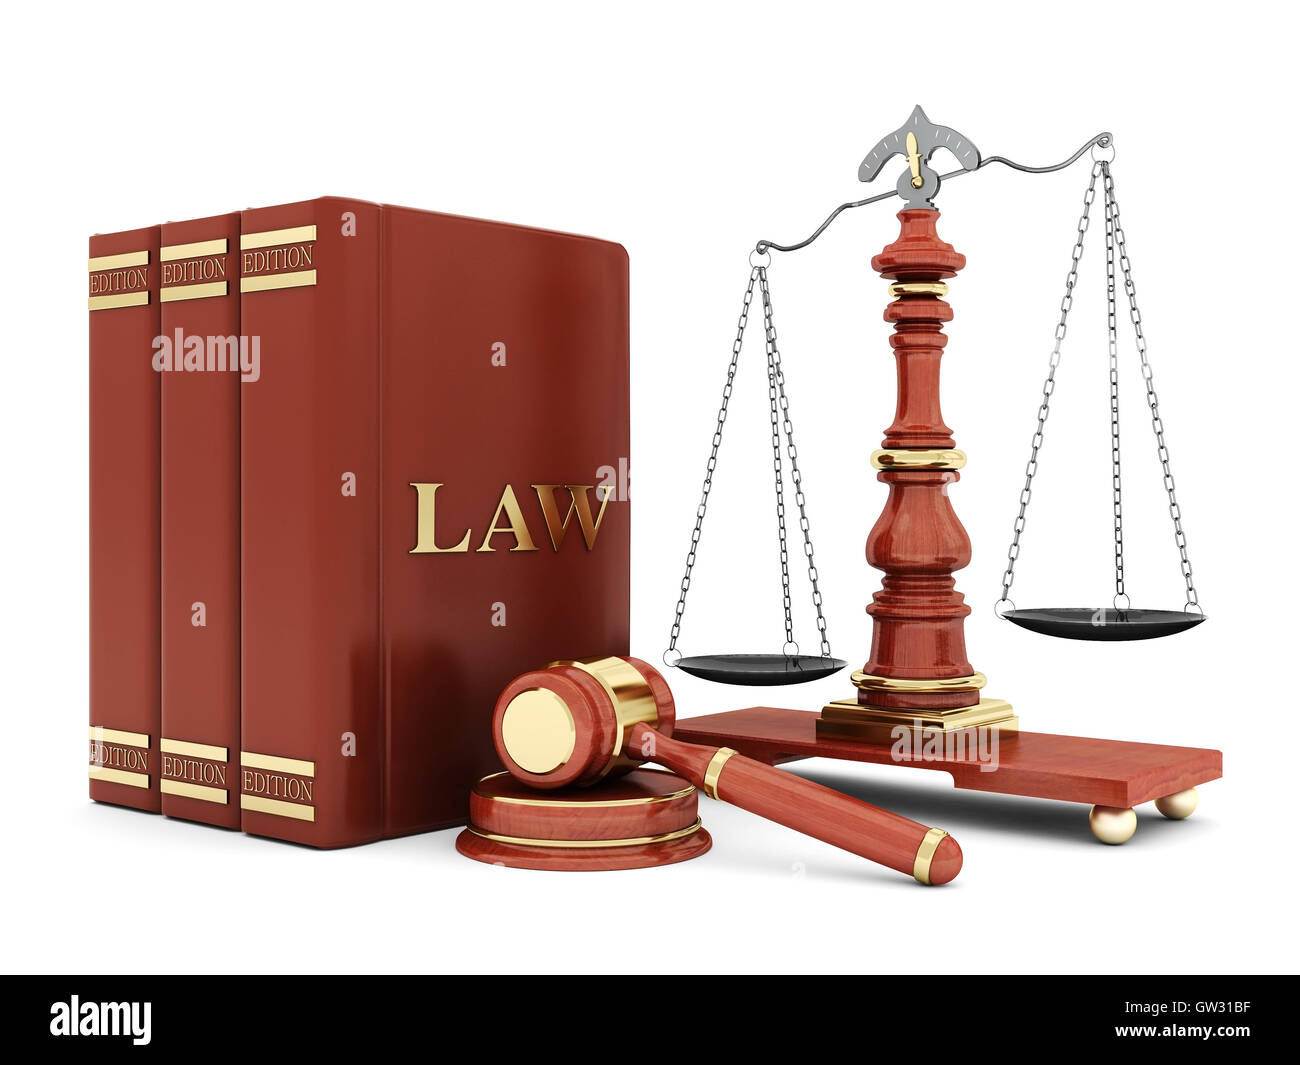 beautiful image of judicial attributes Stock Photo